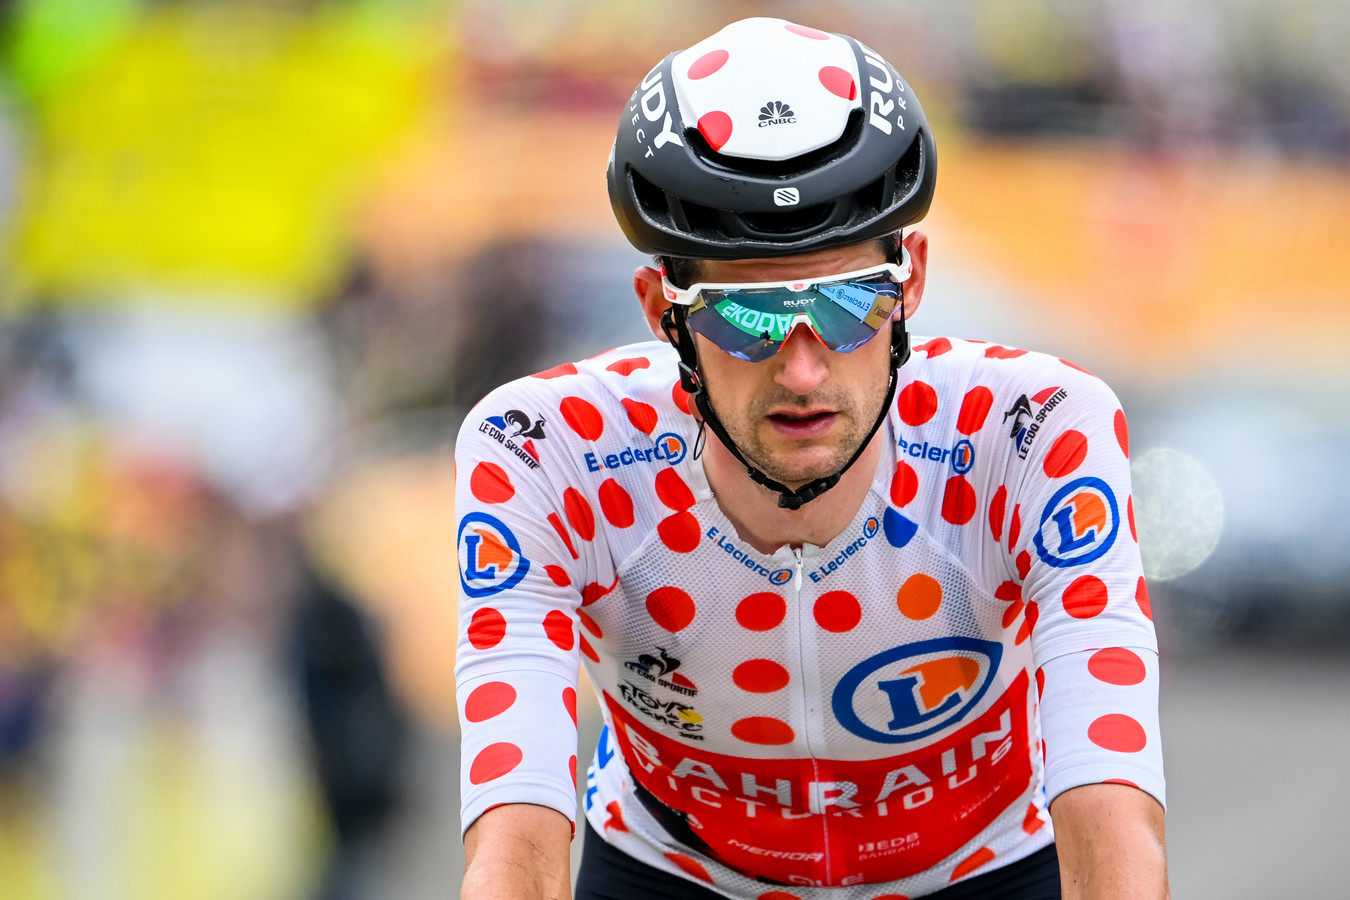 Wout Poels reed de afgelopen Tour de France lang in de bolletjestrui.